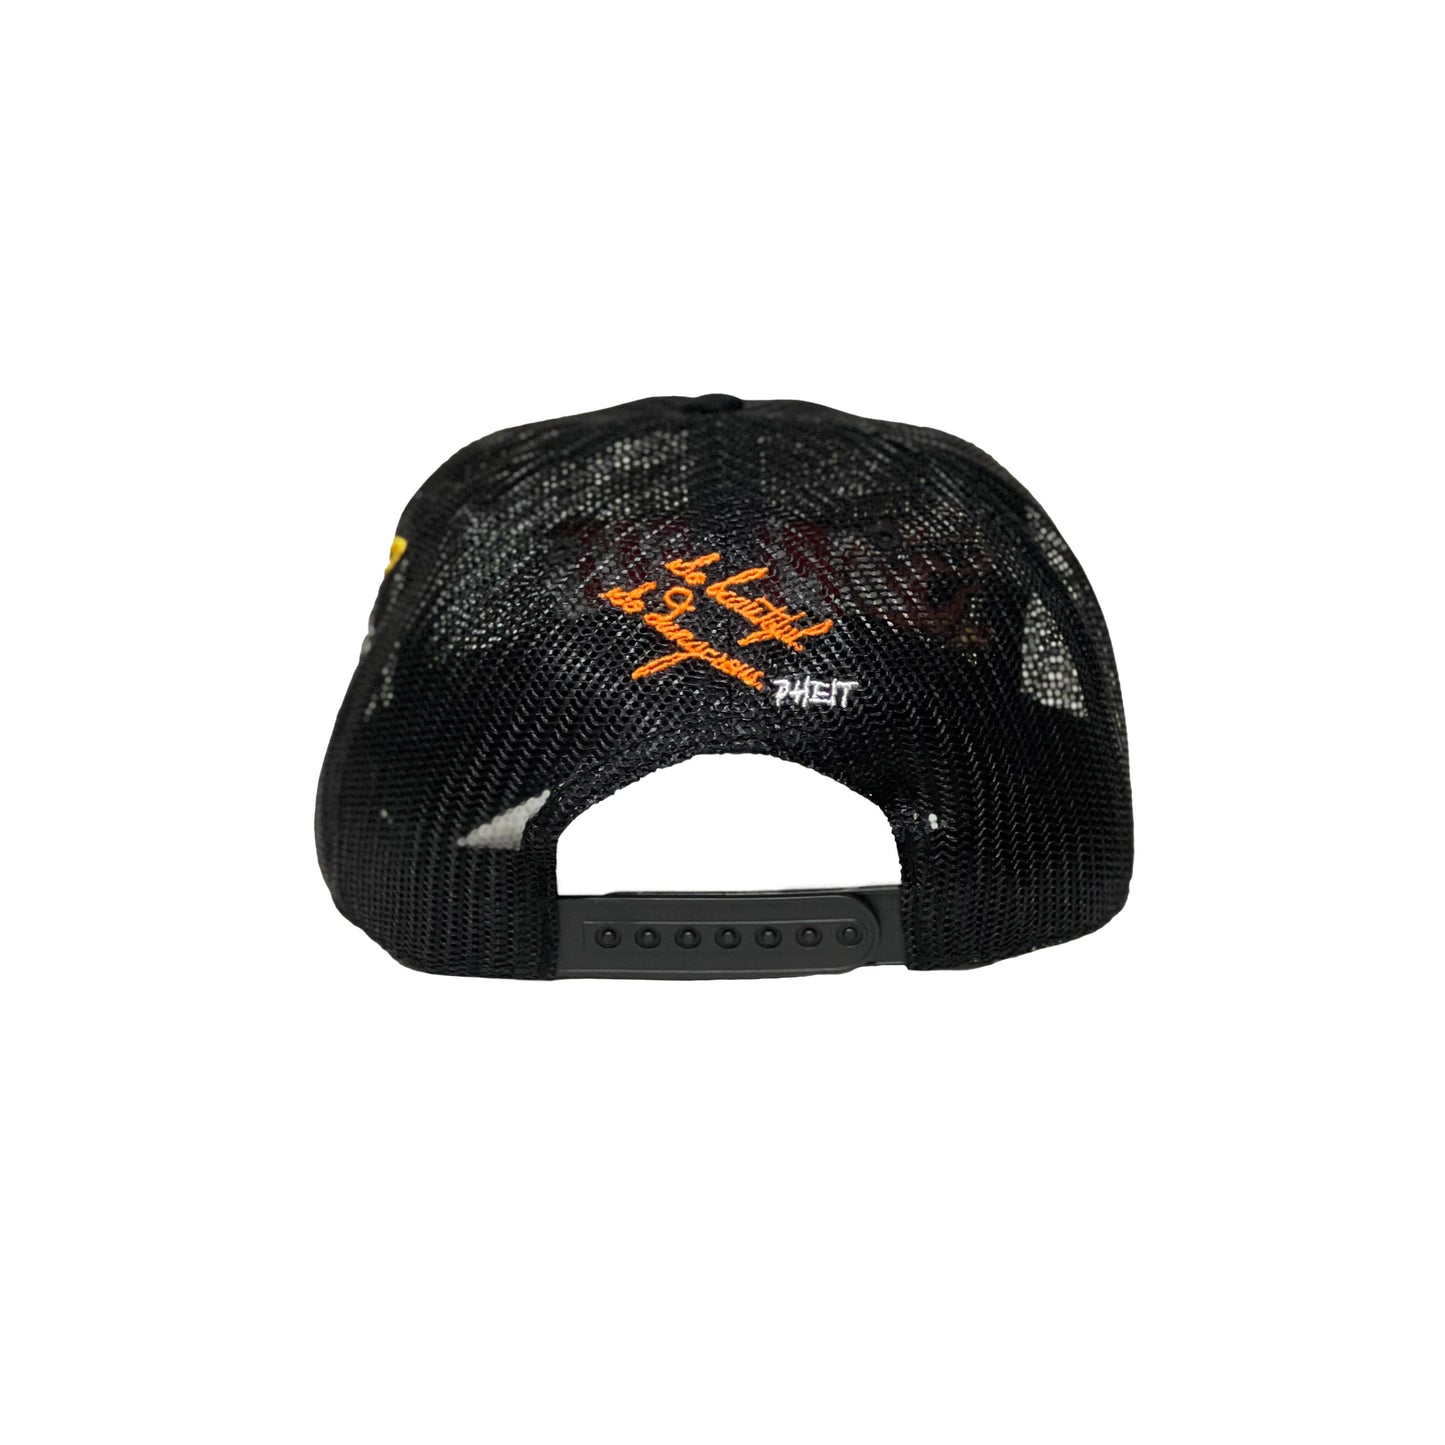 SBSD Lap 2 Racing cap (black)